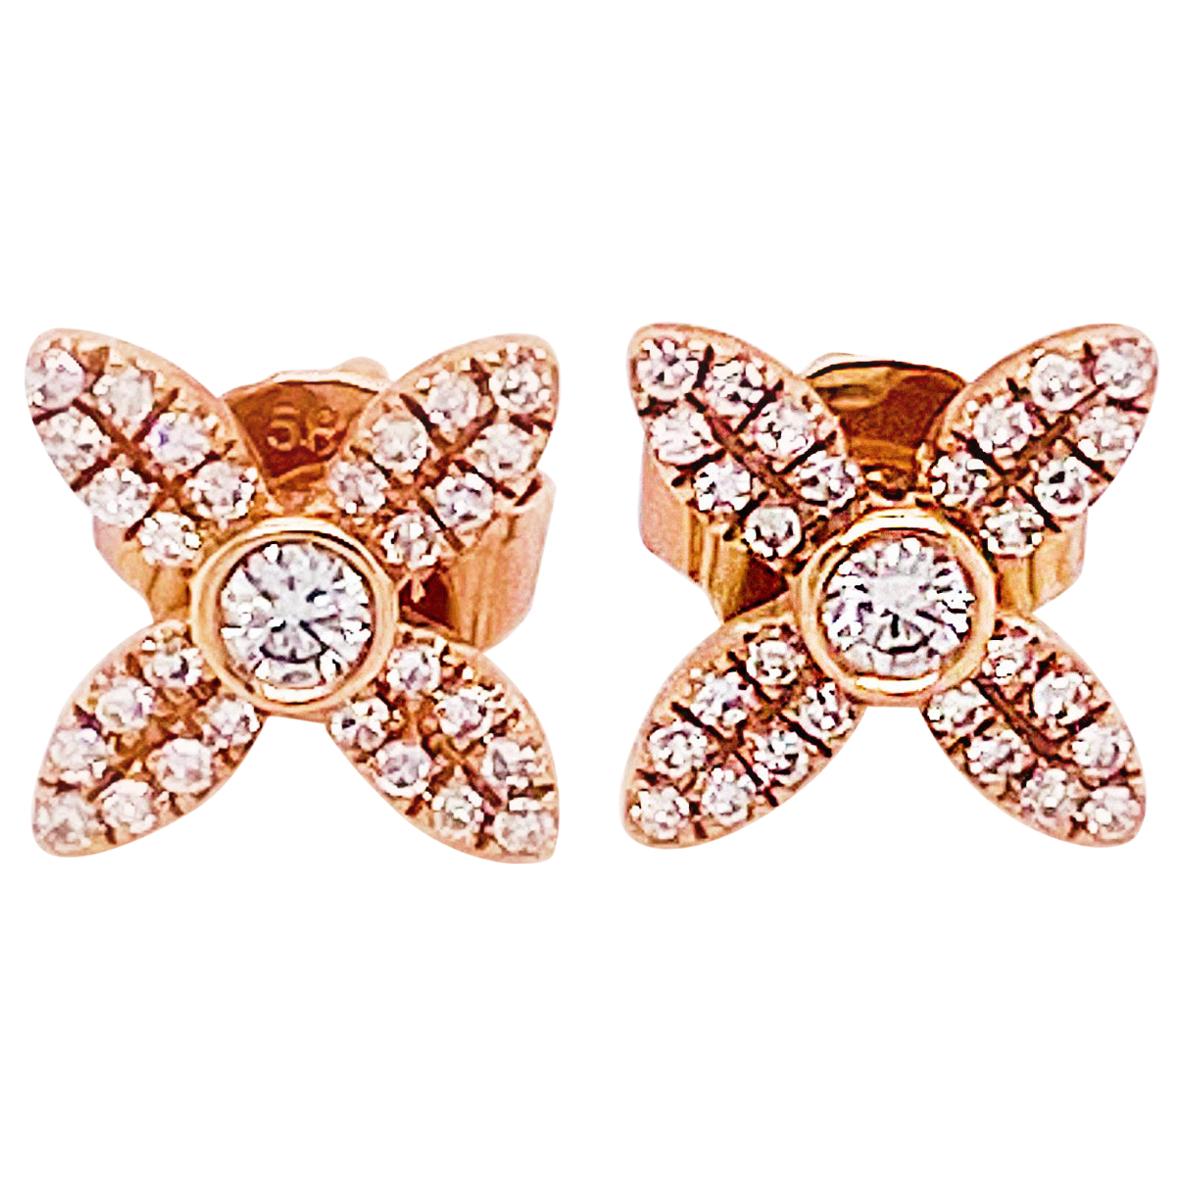 Diamond Clover Rose Gold Stud Earrings .16 Carat Diamond 14K Gold Earring Studs